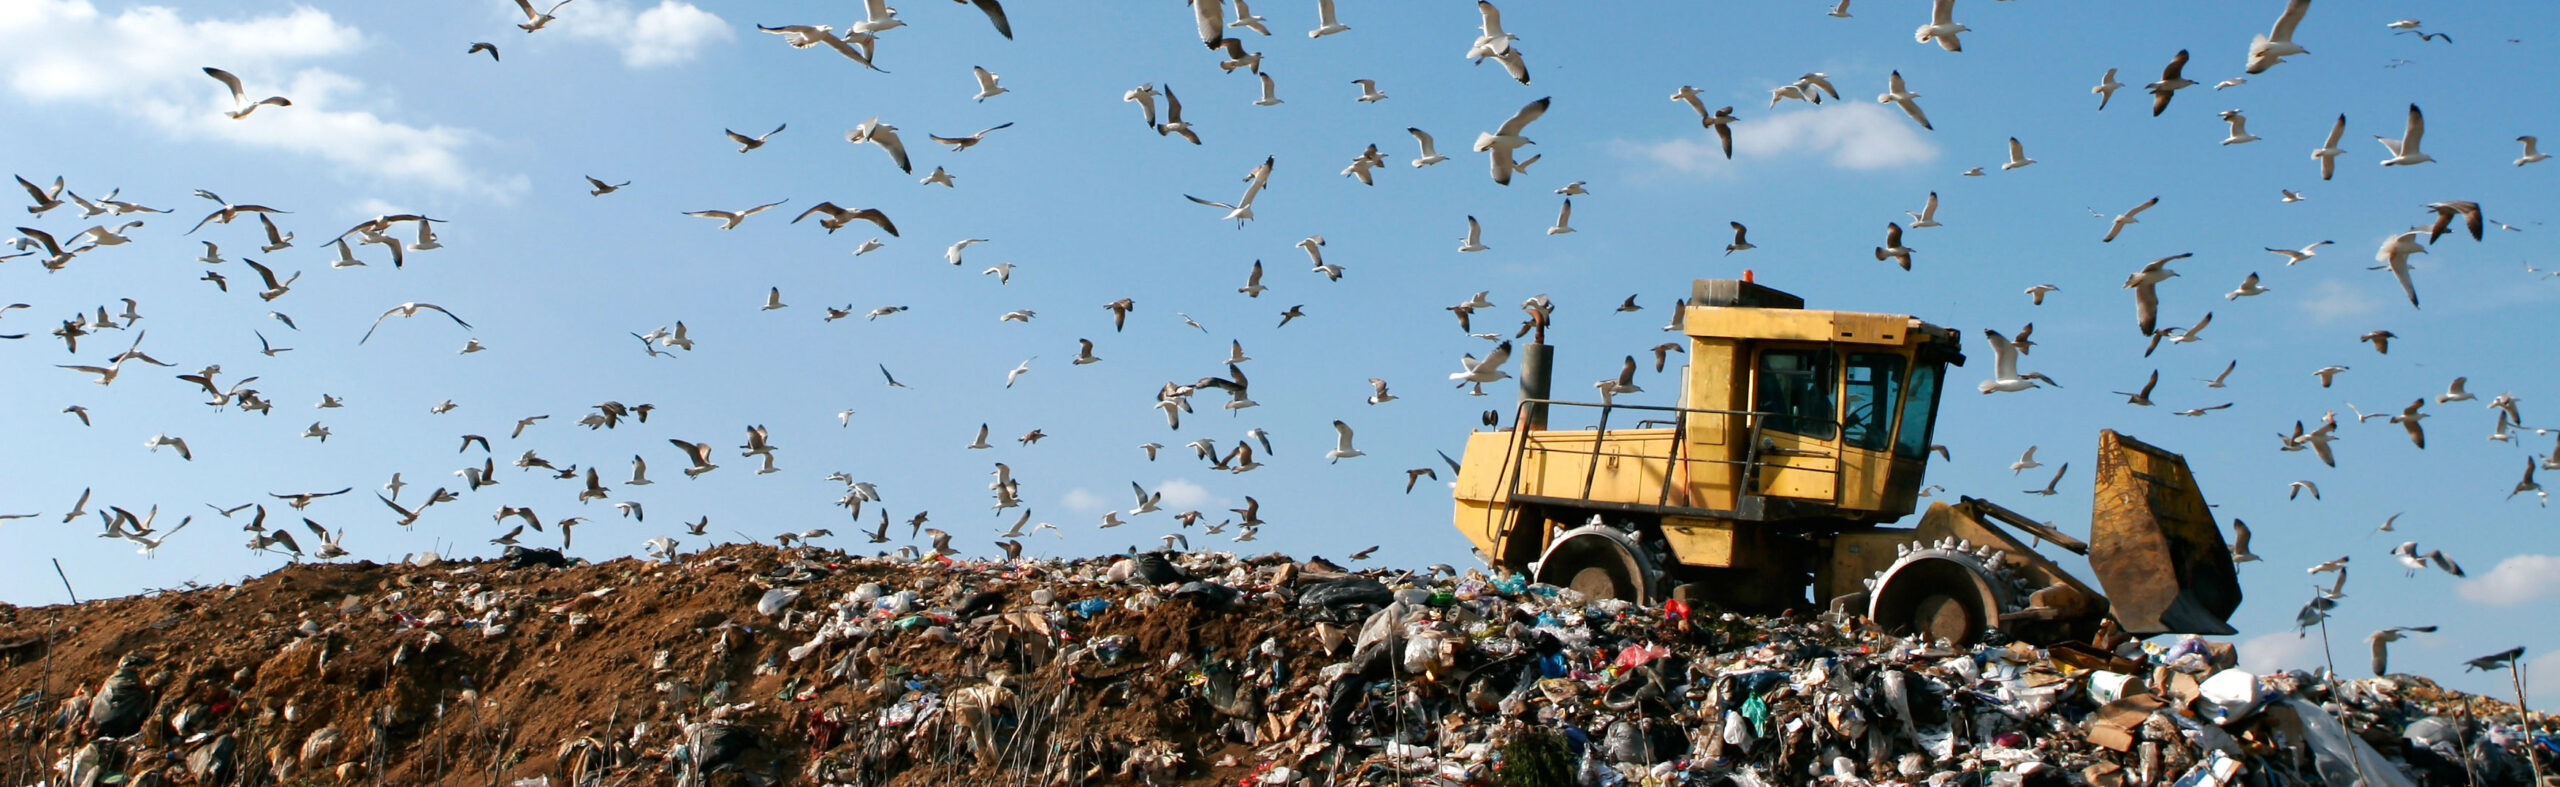 Landfill tax increases raise fraud risk